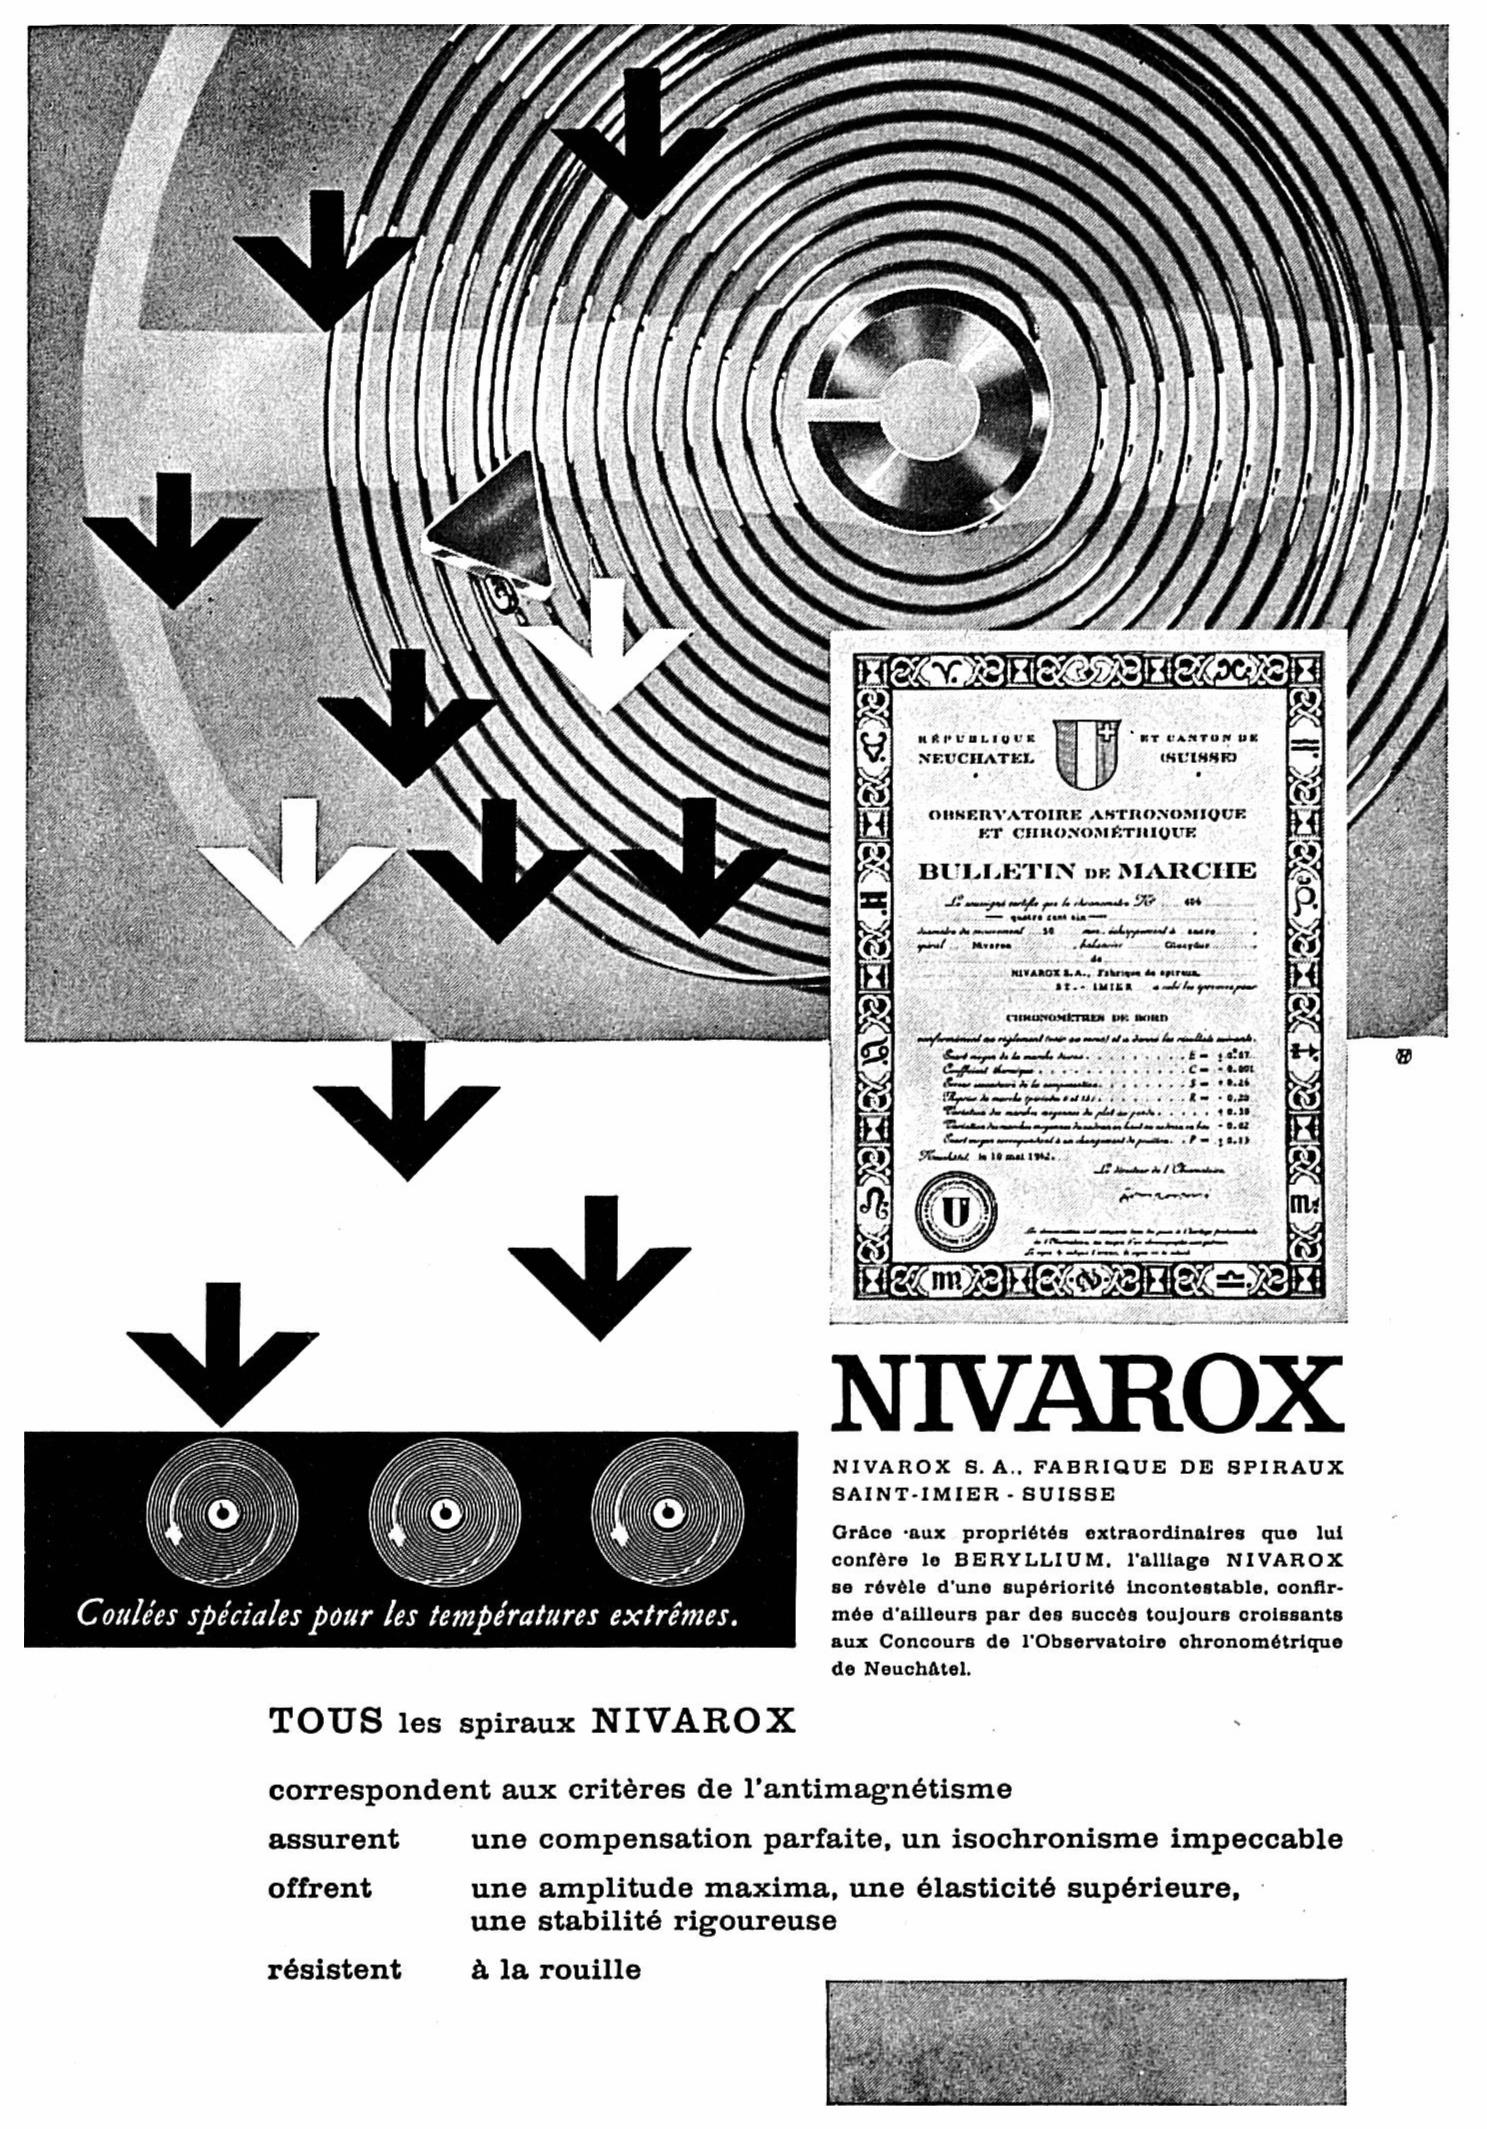 Nivarox 1972 66.jpg